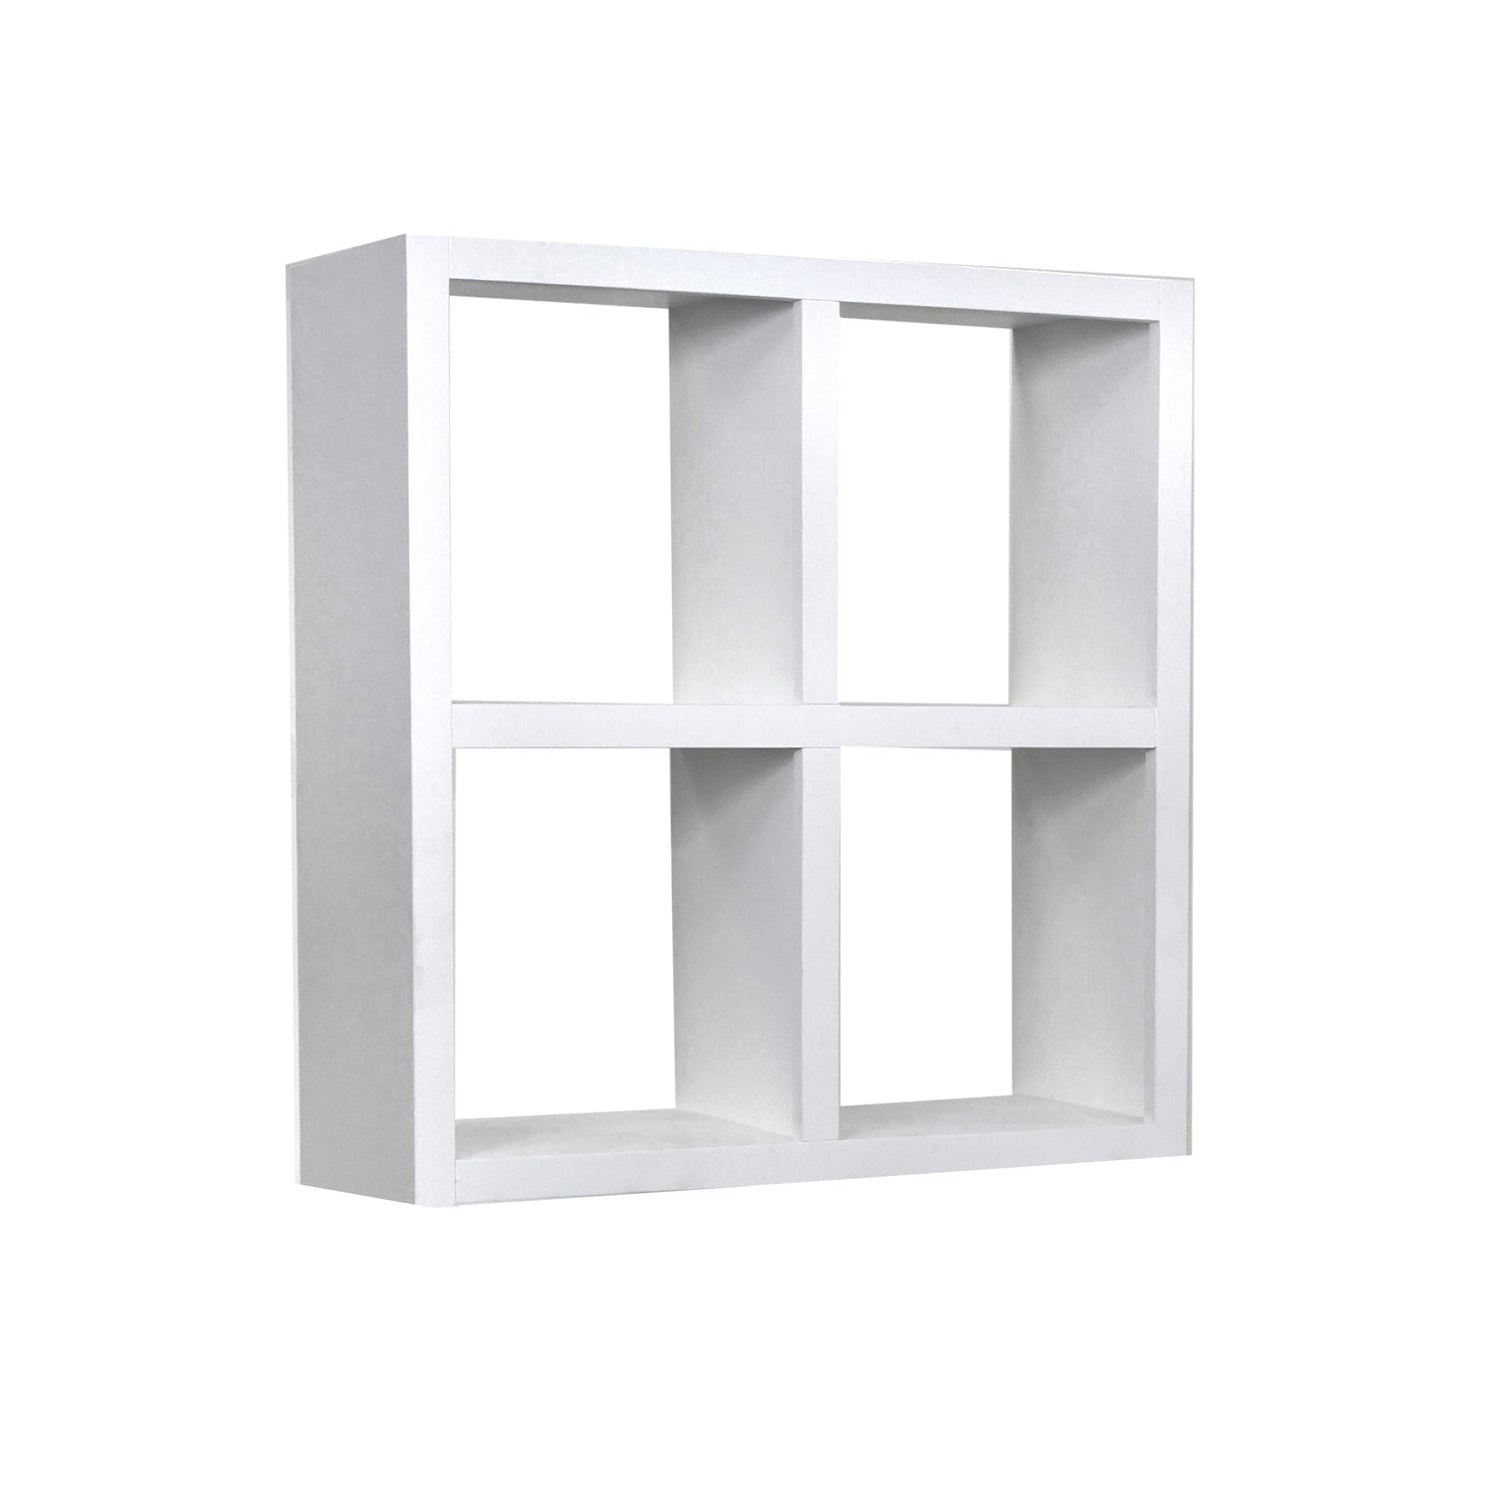 Cube Shelving (2 high x 2 wide) Office &amp; Storage Furniture Beachwood Designs White 